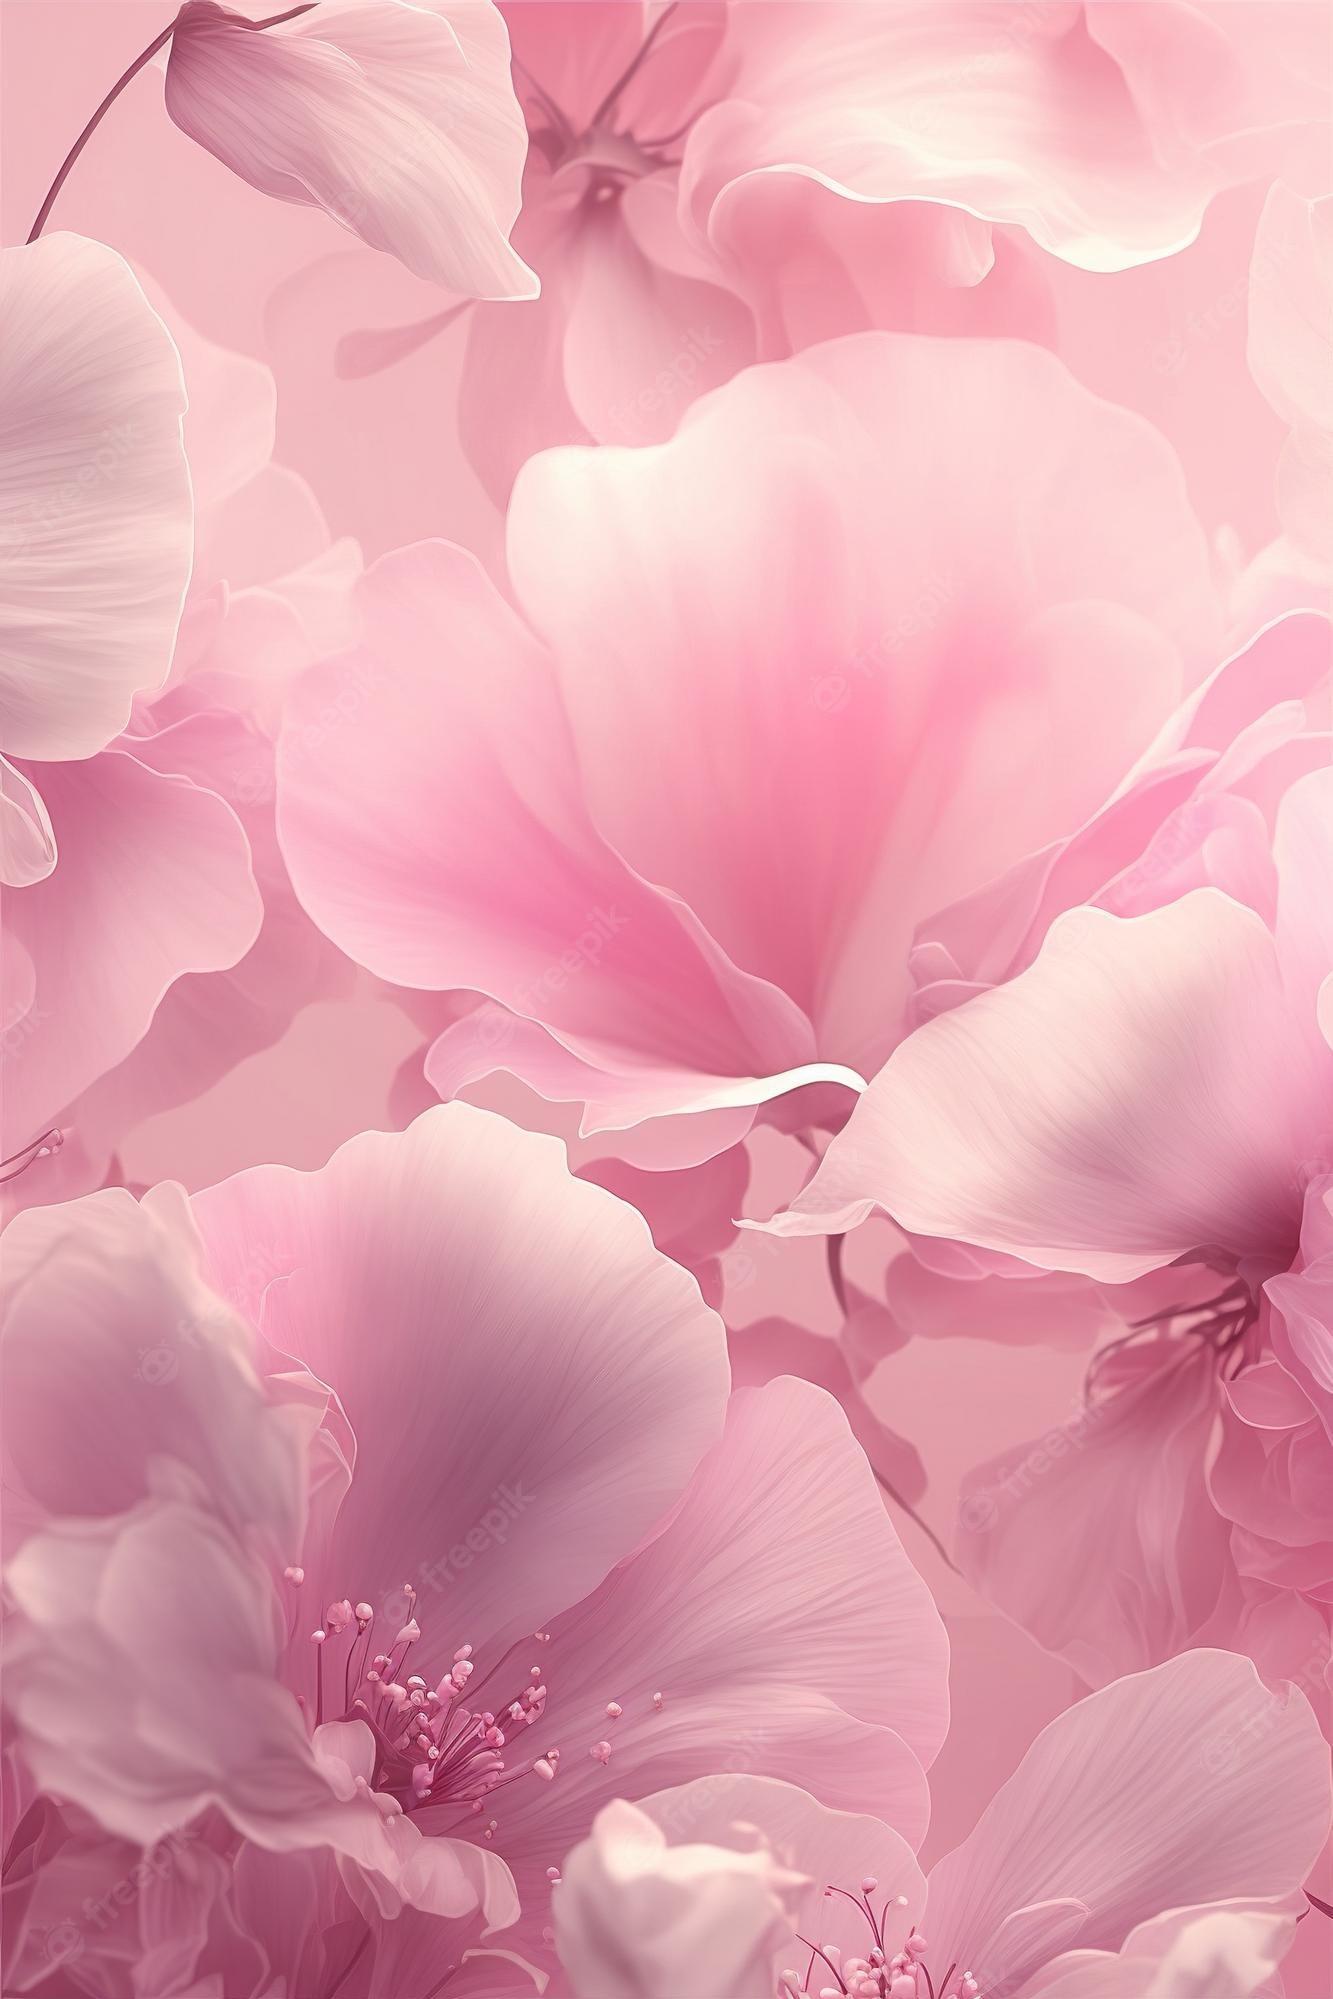 Premium Photo Delicate Romantic Pastel Pink Background With